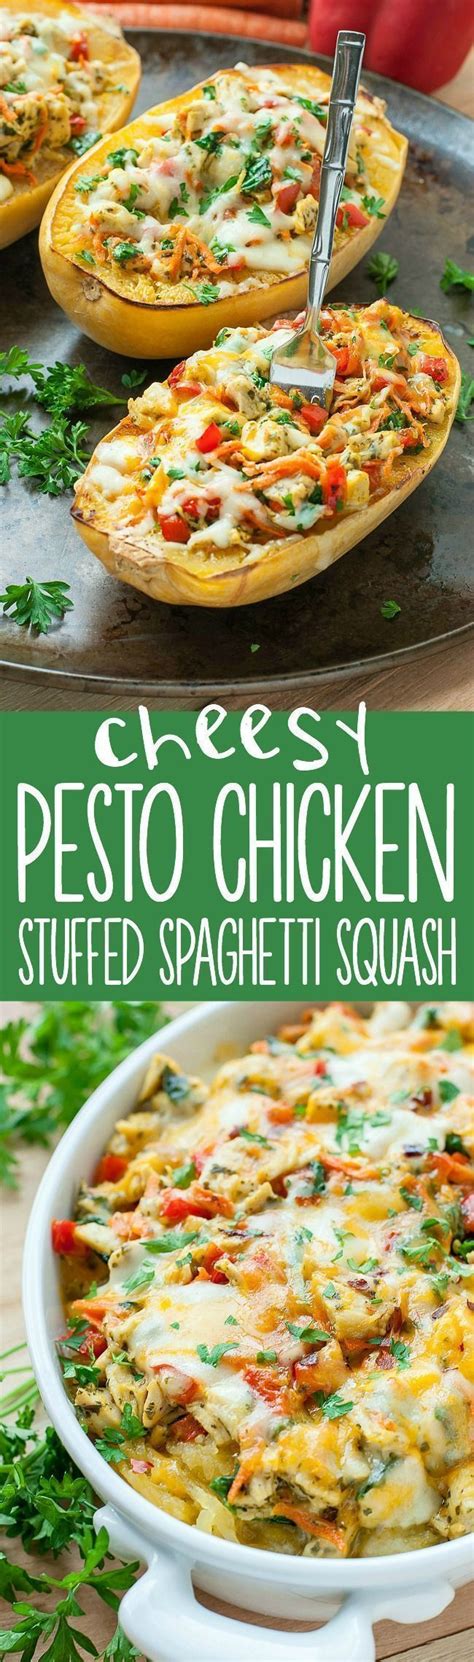 Cheesy Pesto Chicken And Veggie Stuffed Spaghetti Squash Veggies